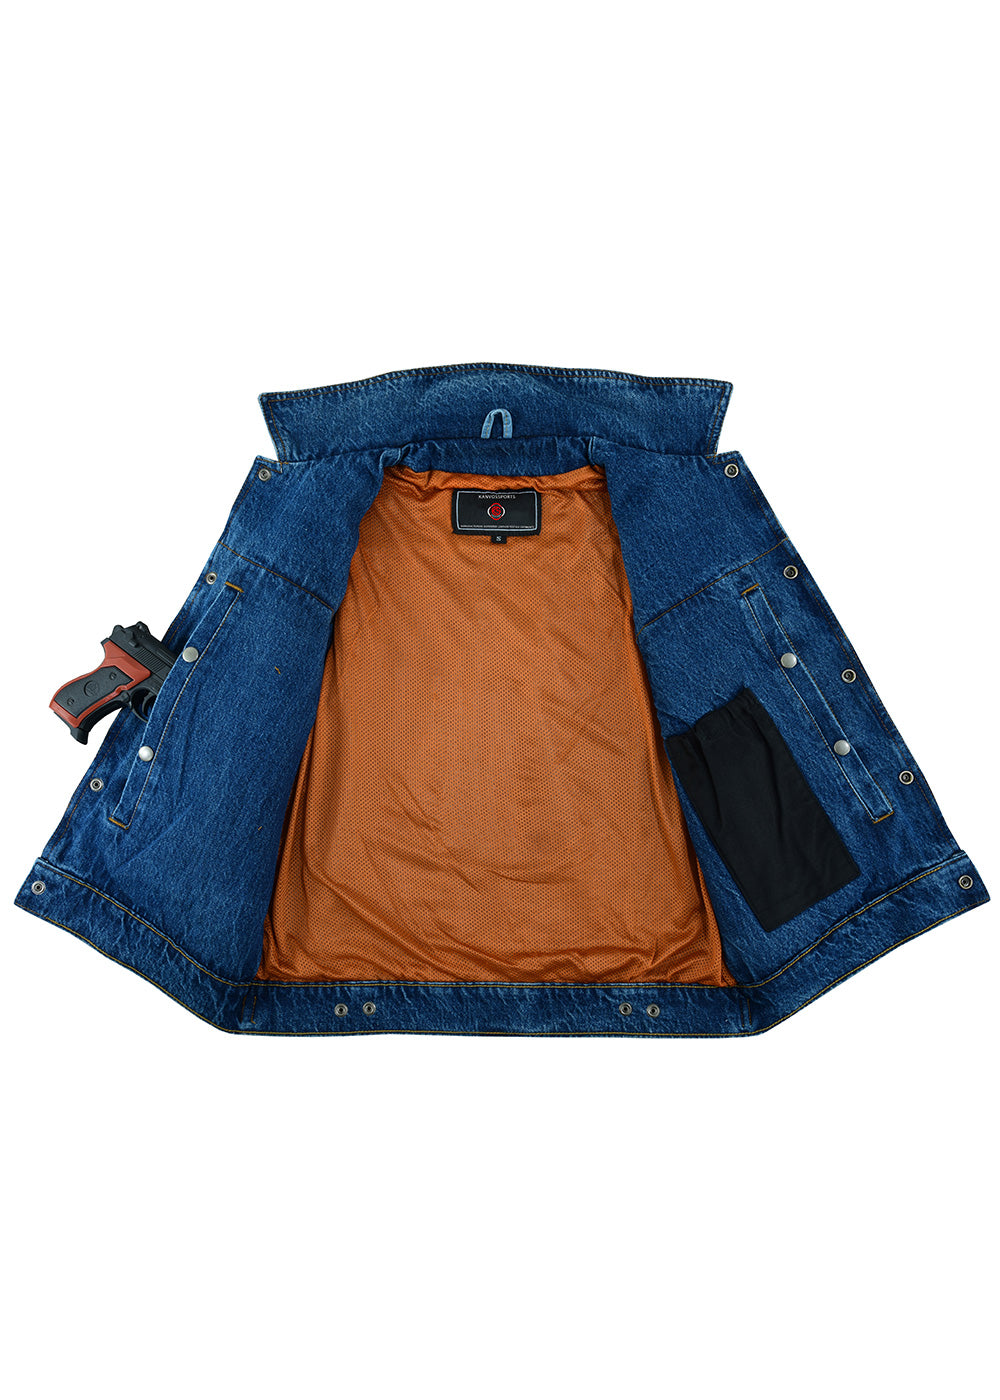 Men's Denim Leather Vest-2